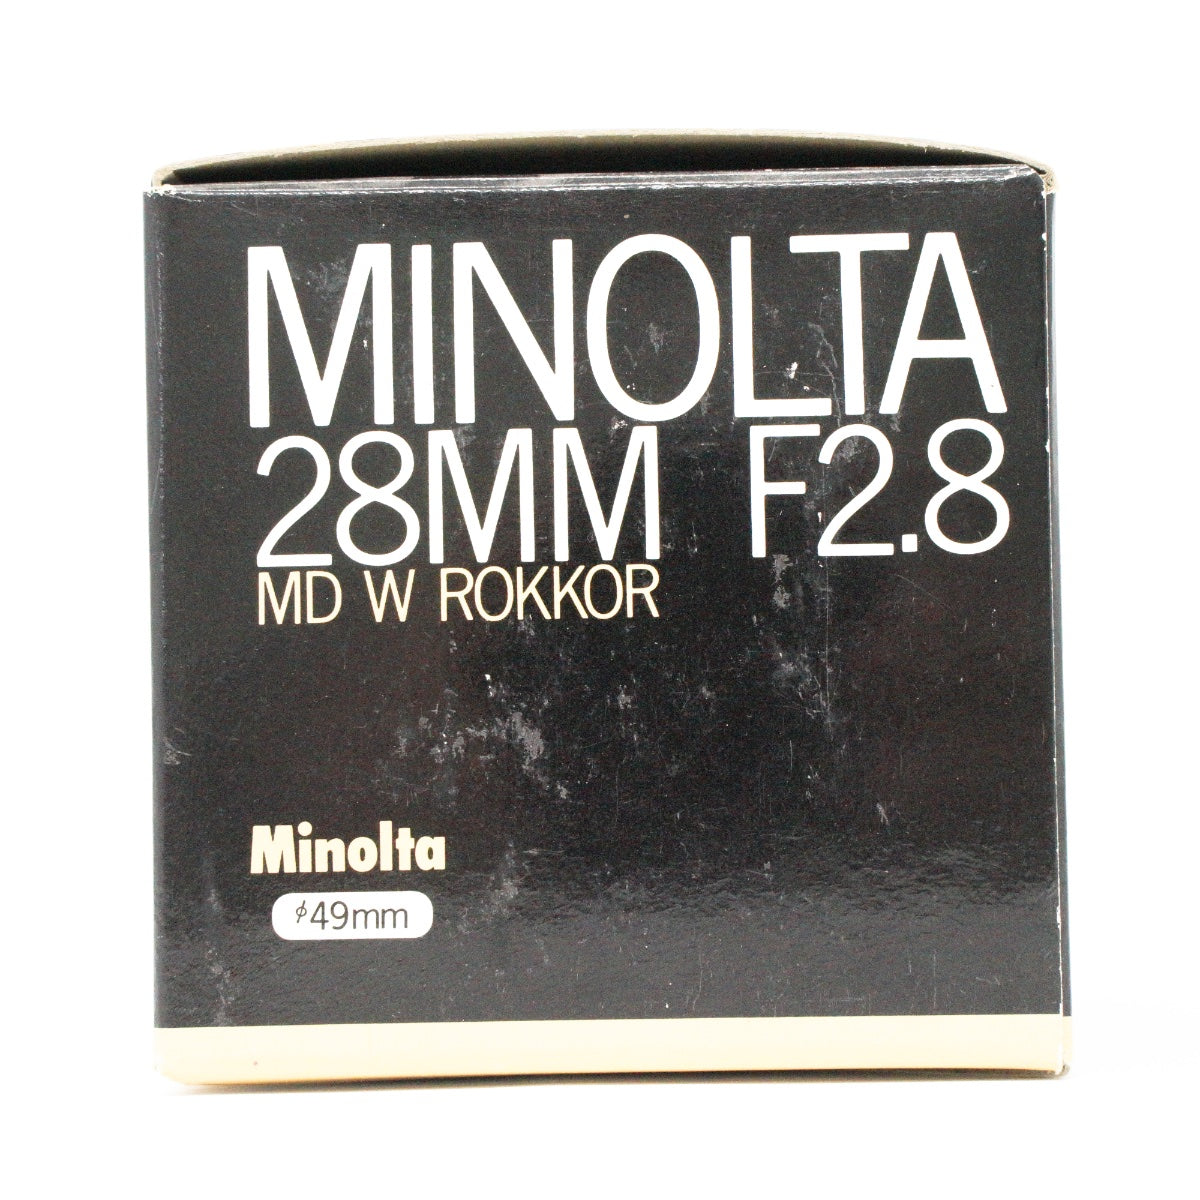 Used Minolta MD W.Rokkor 28mm F2.8 lens for film cameras